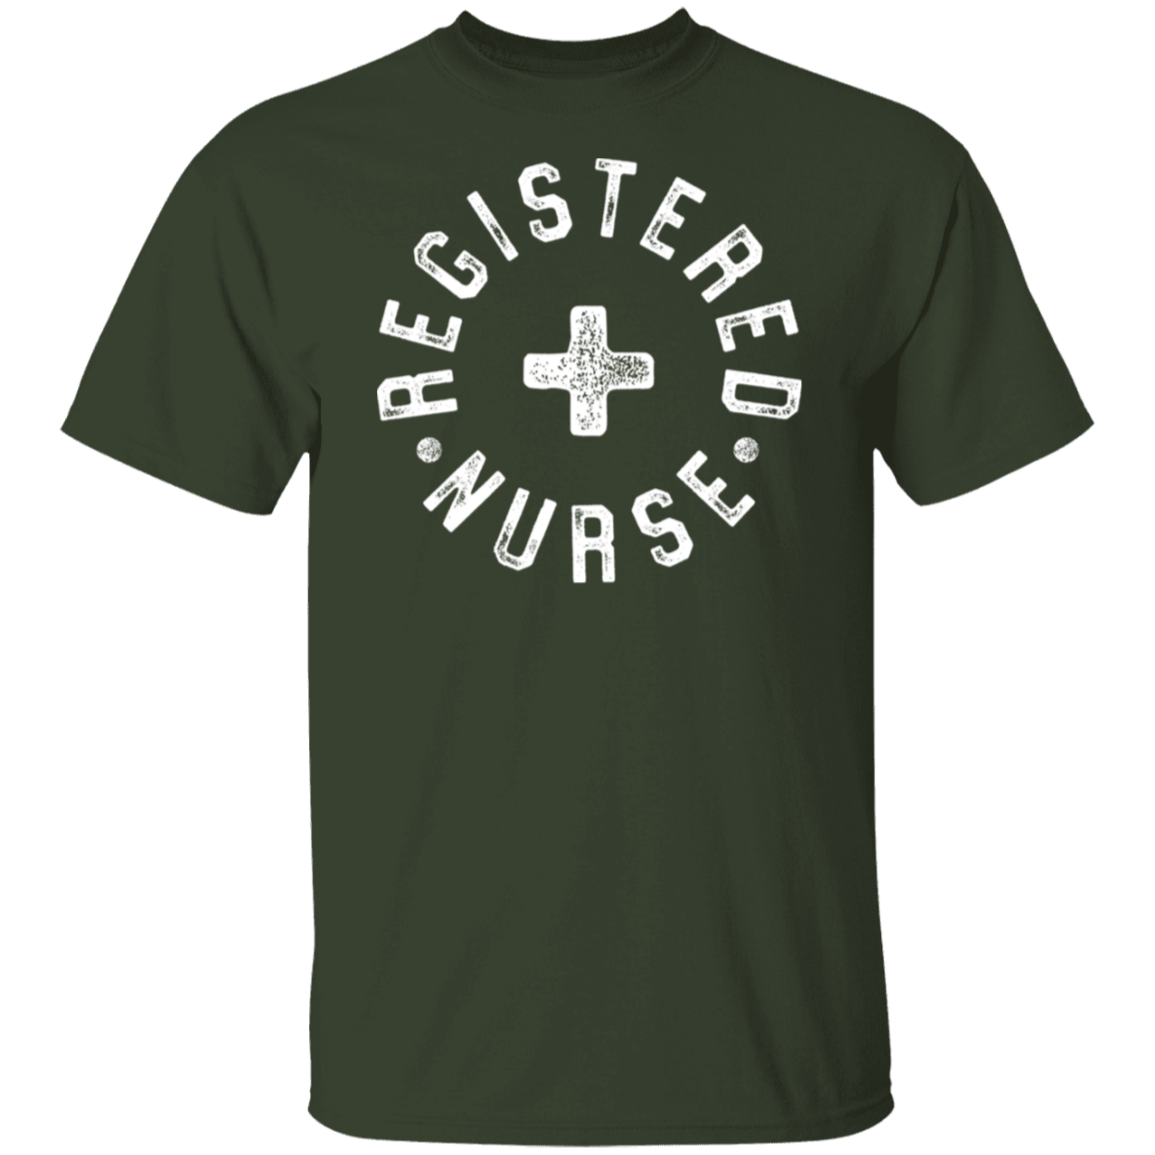 Registered Nurse White Print T-Shirt